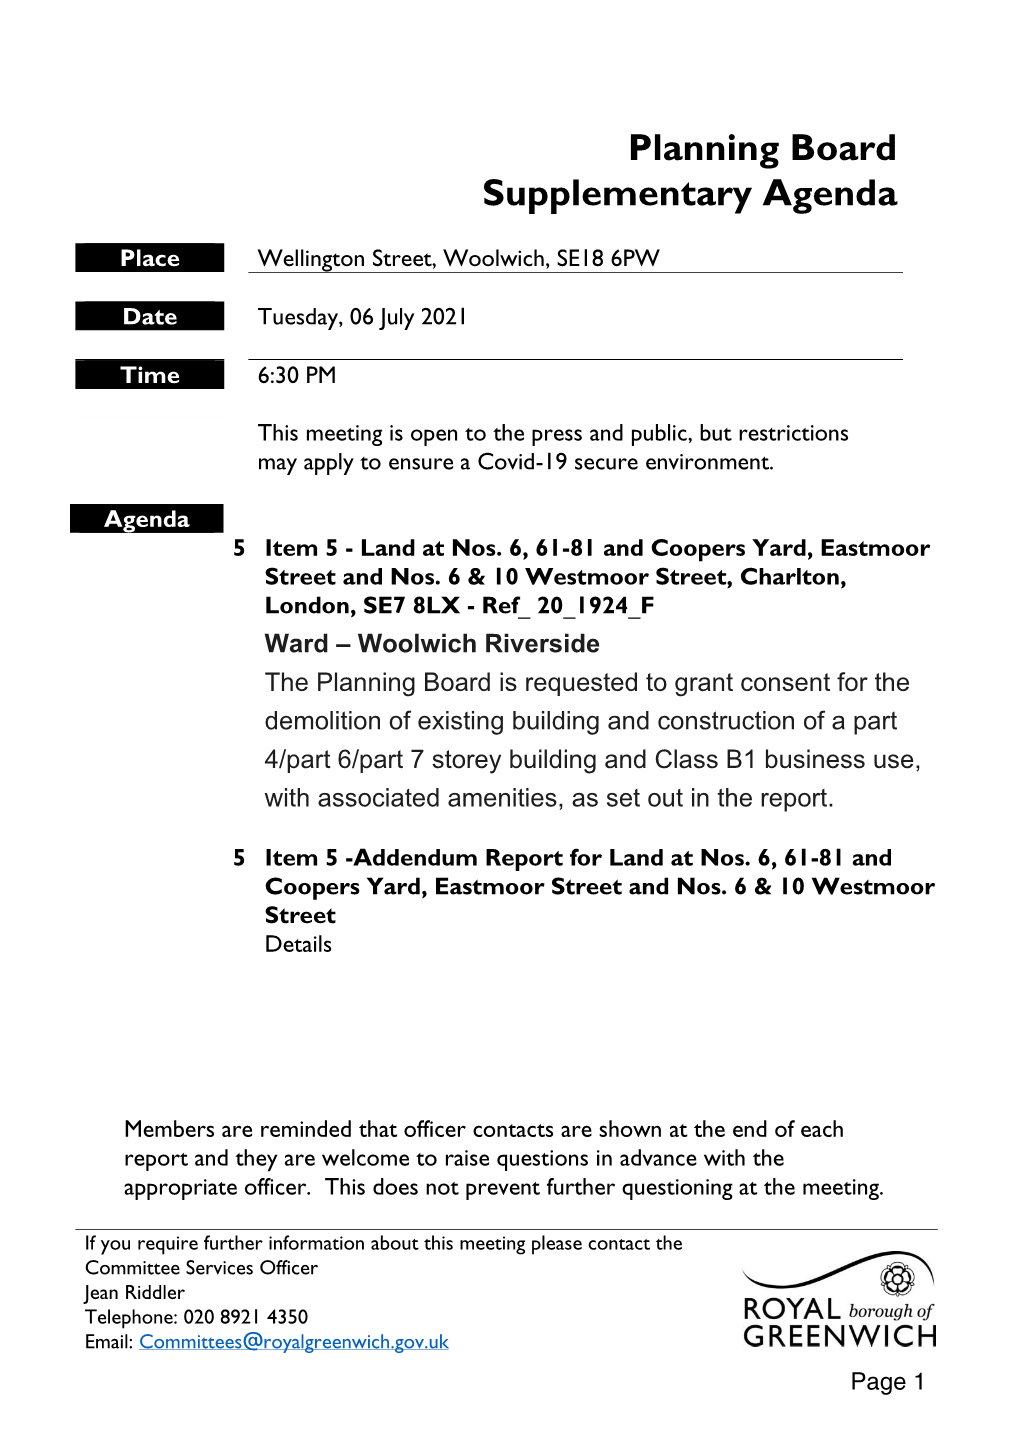 Planning Board Supplementary Agenda